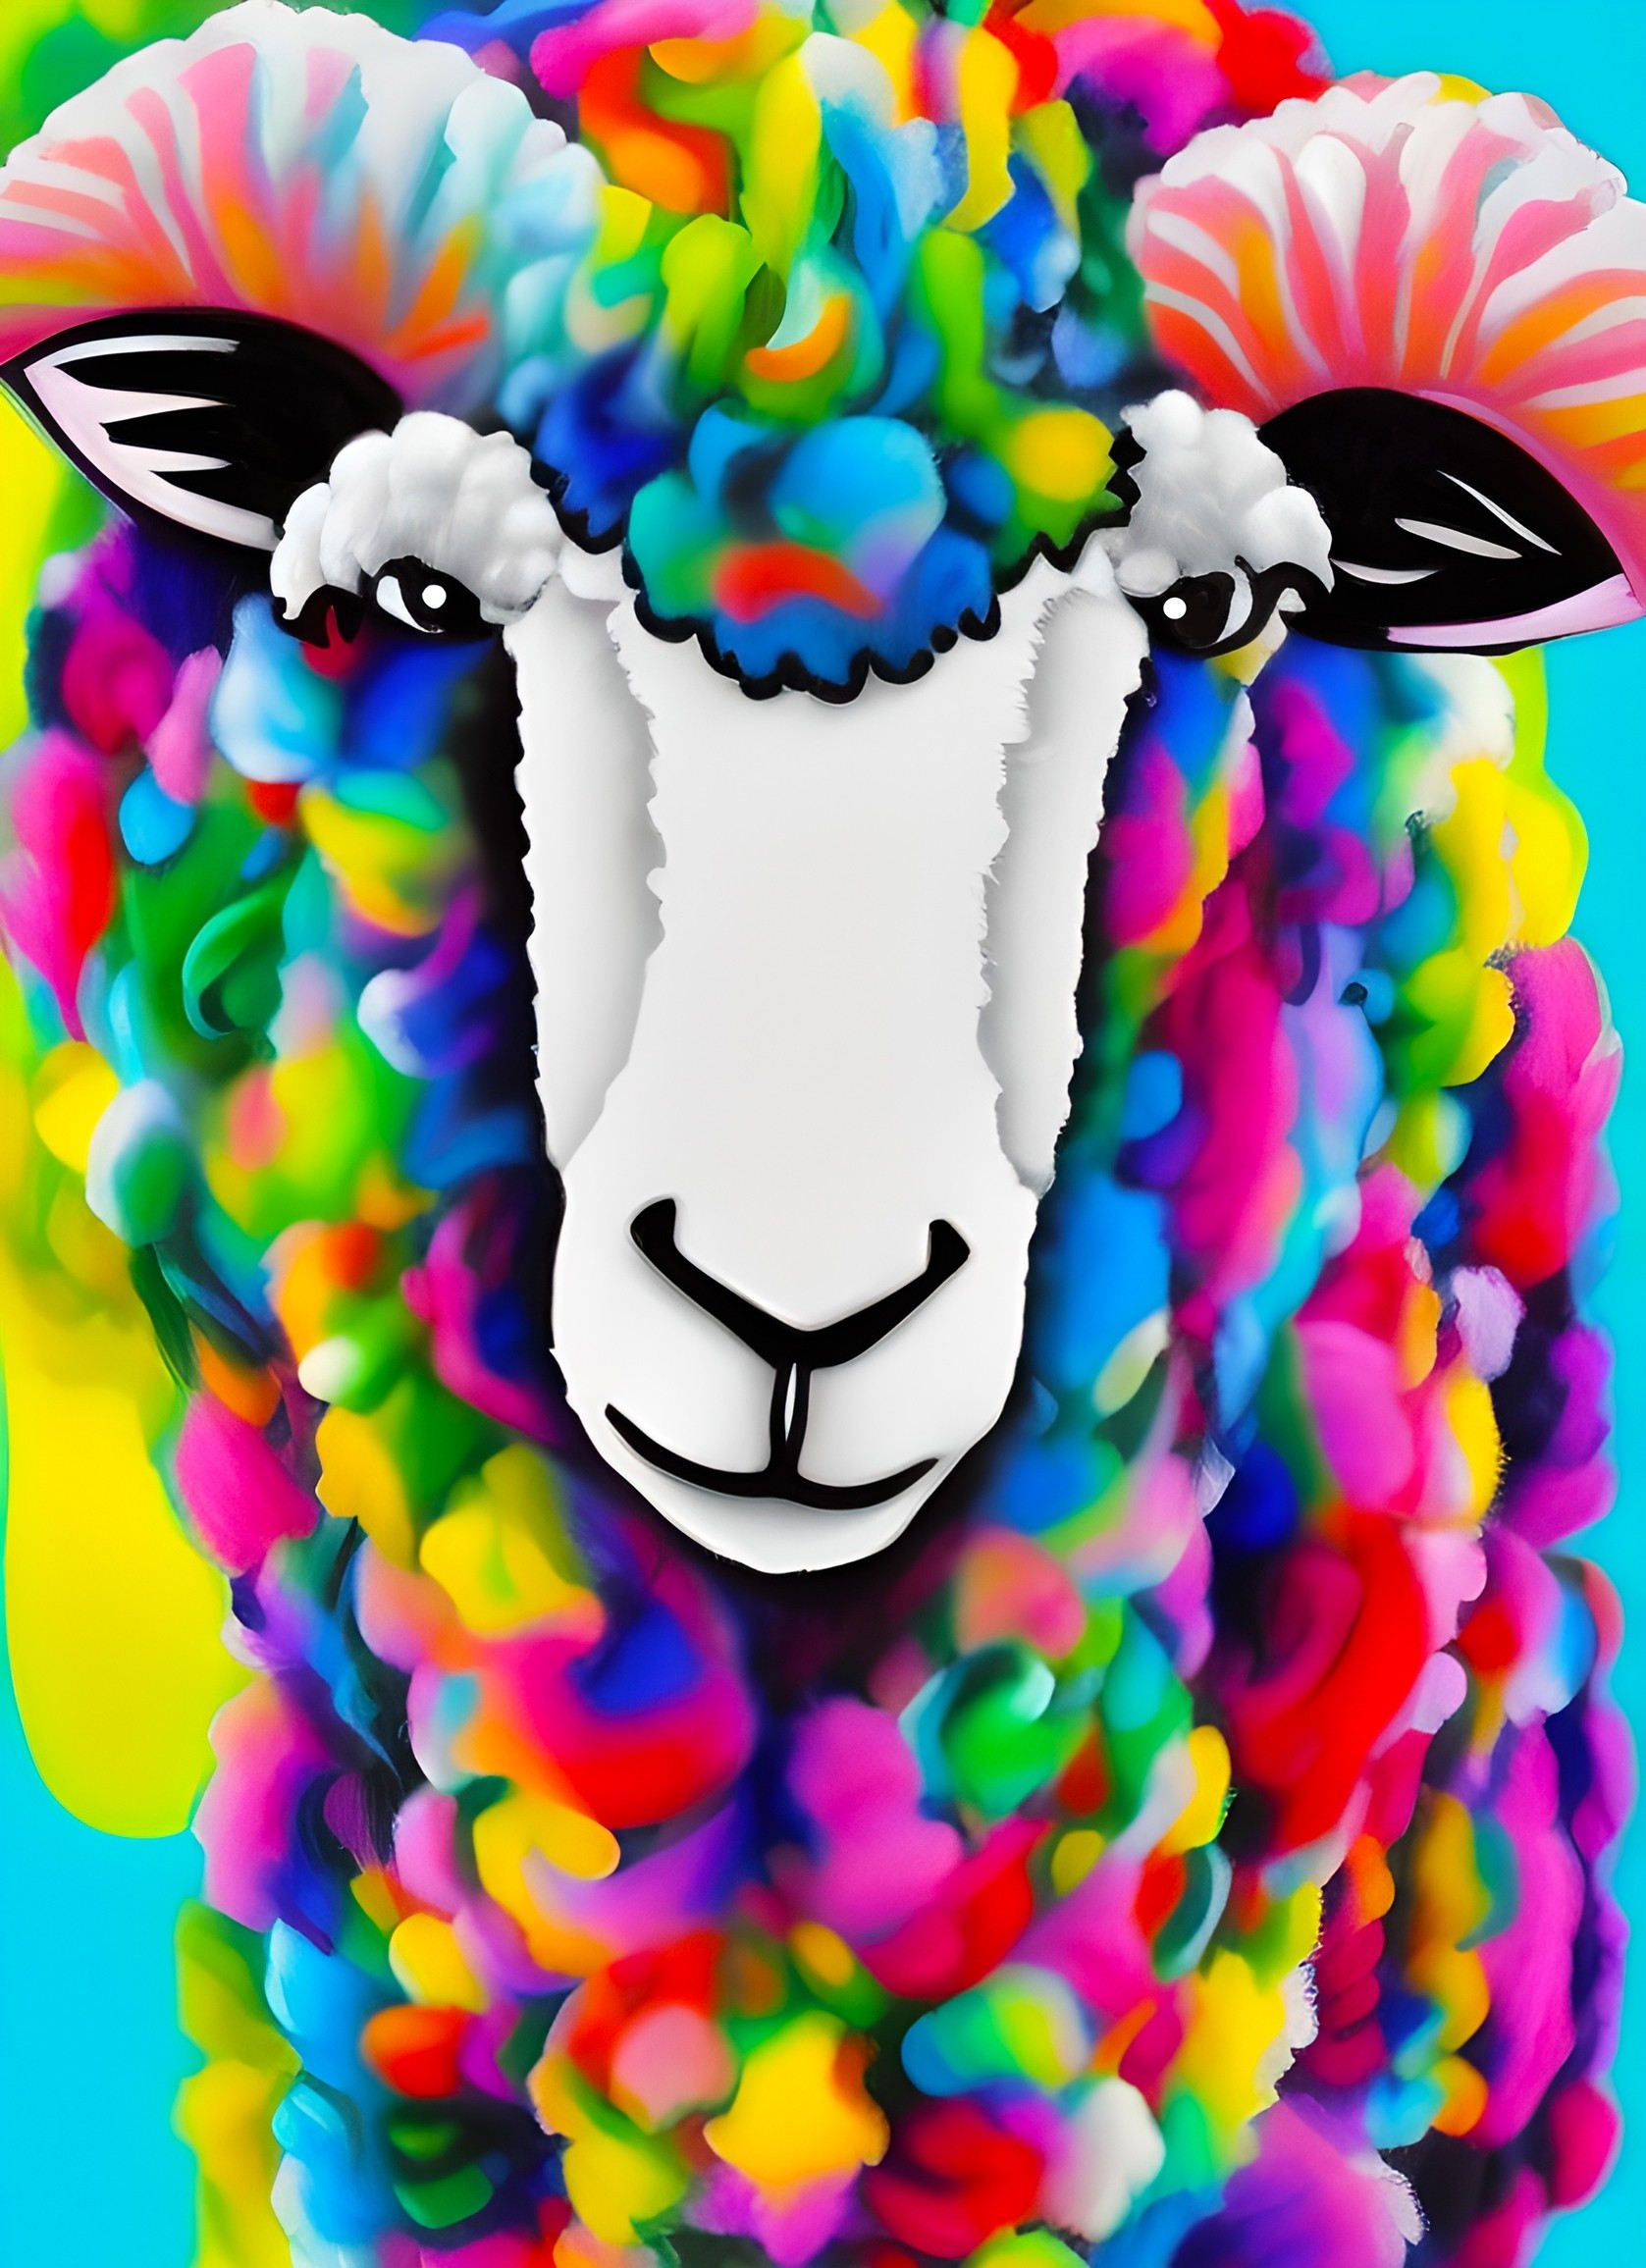 Sheep Animal Colourful Abstract Art Blank Greeting Card